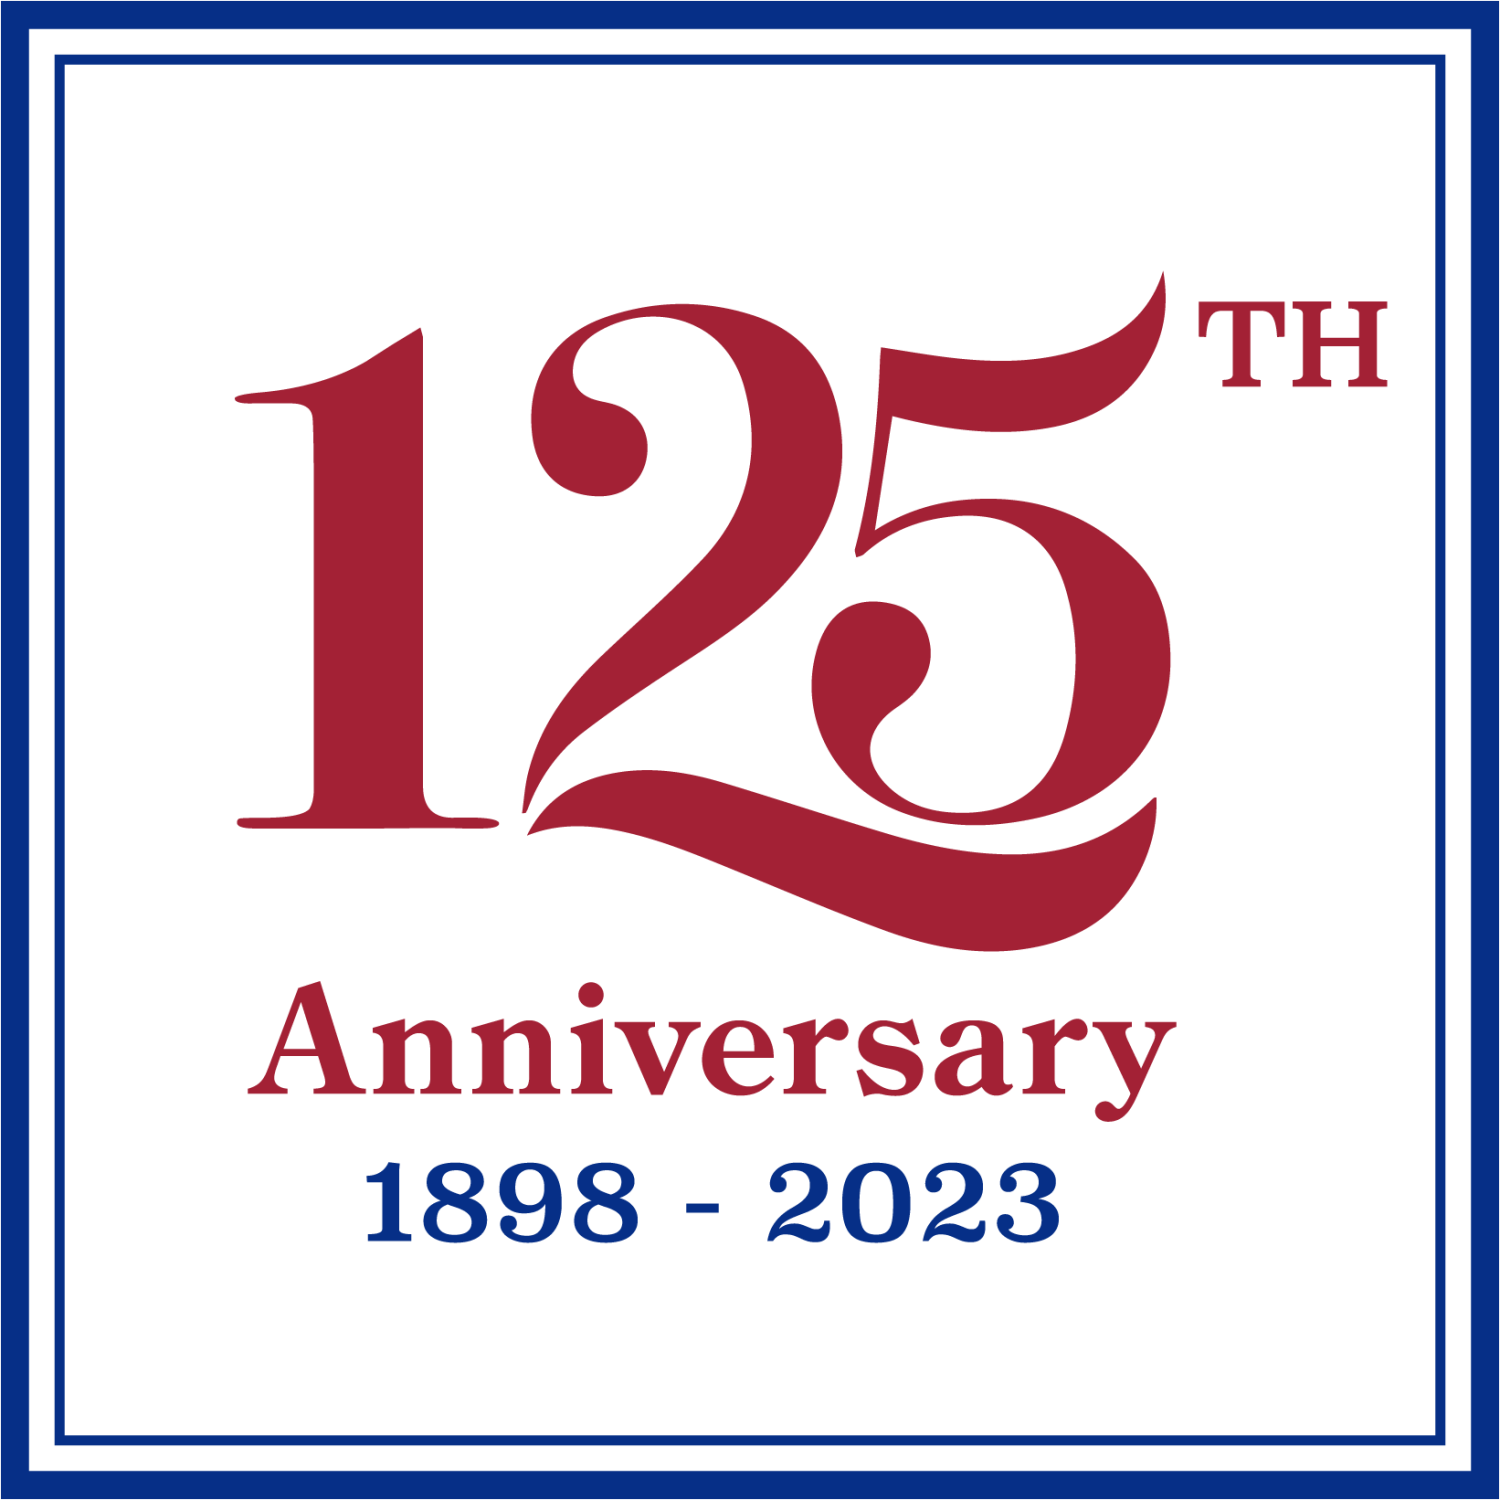 125th Anniversary 1898-2023